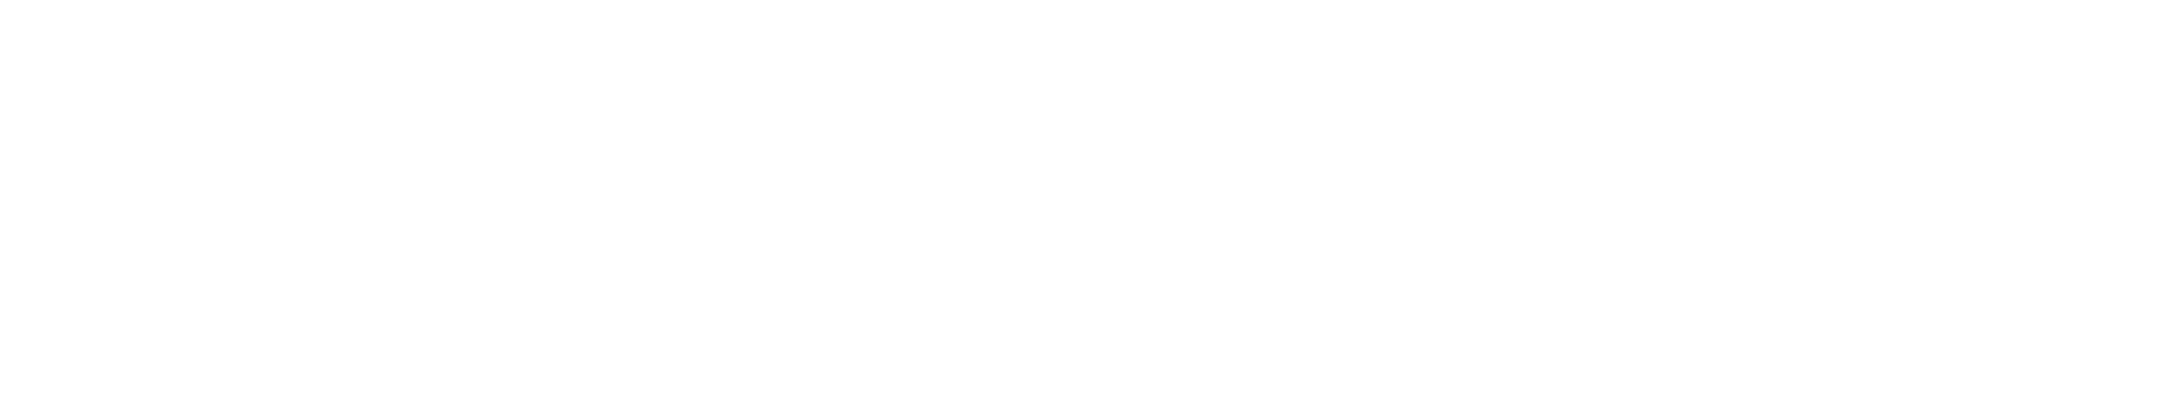 Data Sharing Toolkit